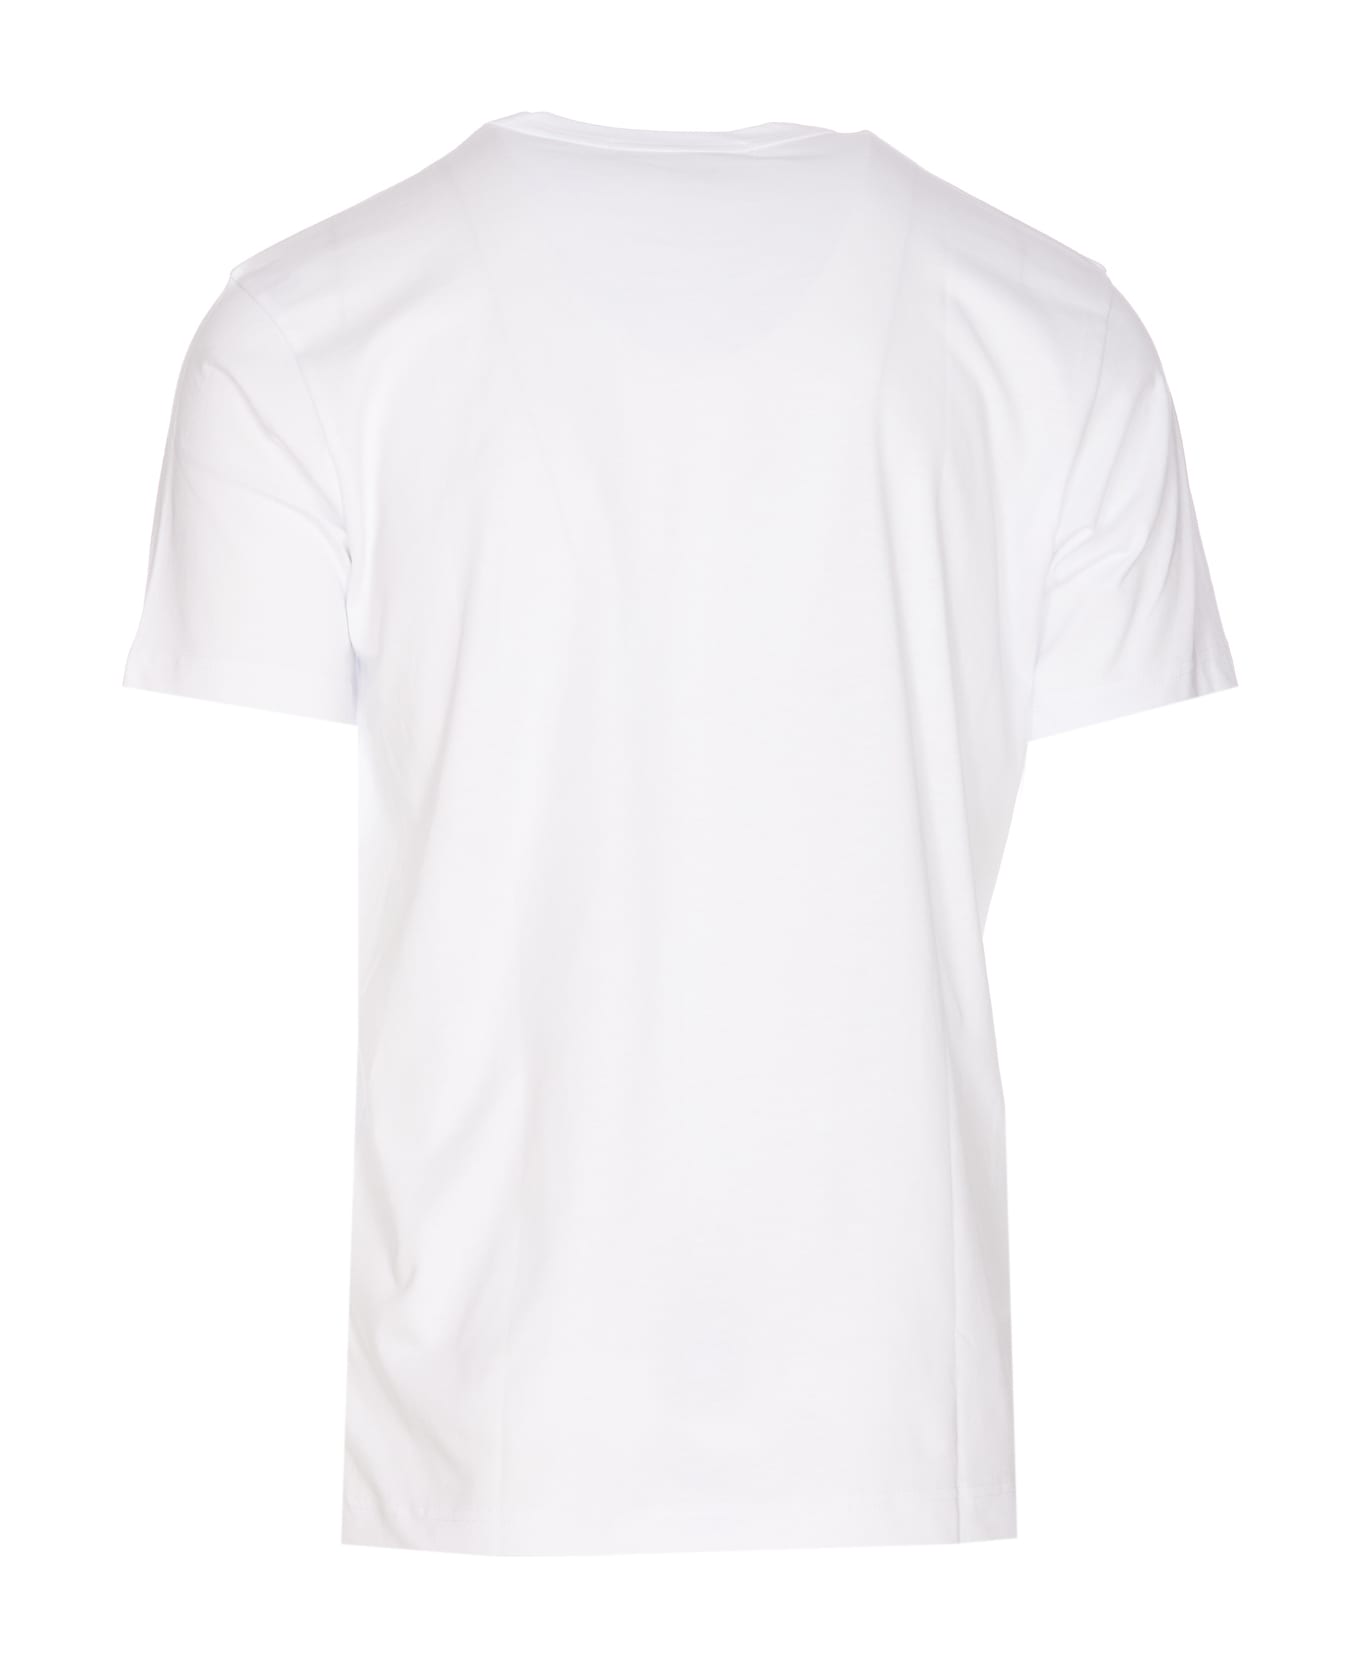 Comme des Garçons Muhammad Ali' Print T-shirt - White